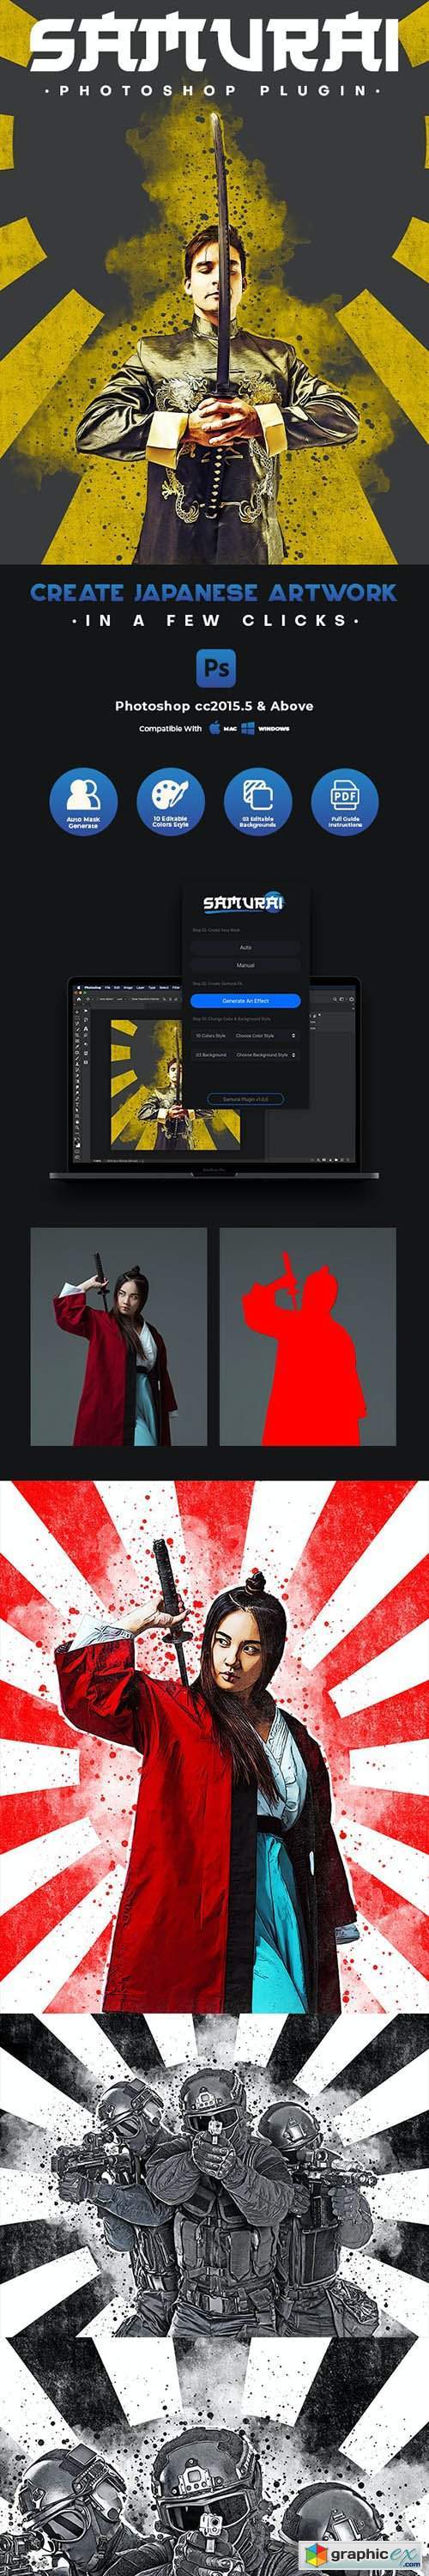 Samurai - Photoshop Plugin